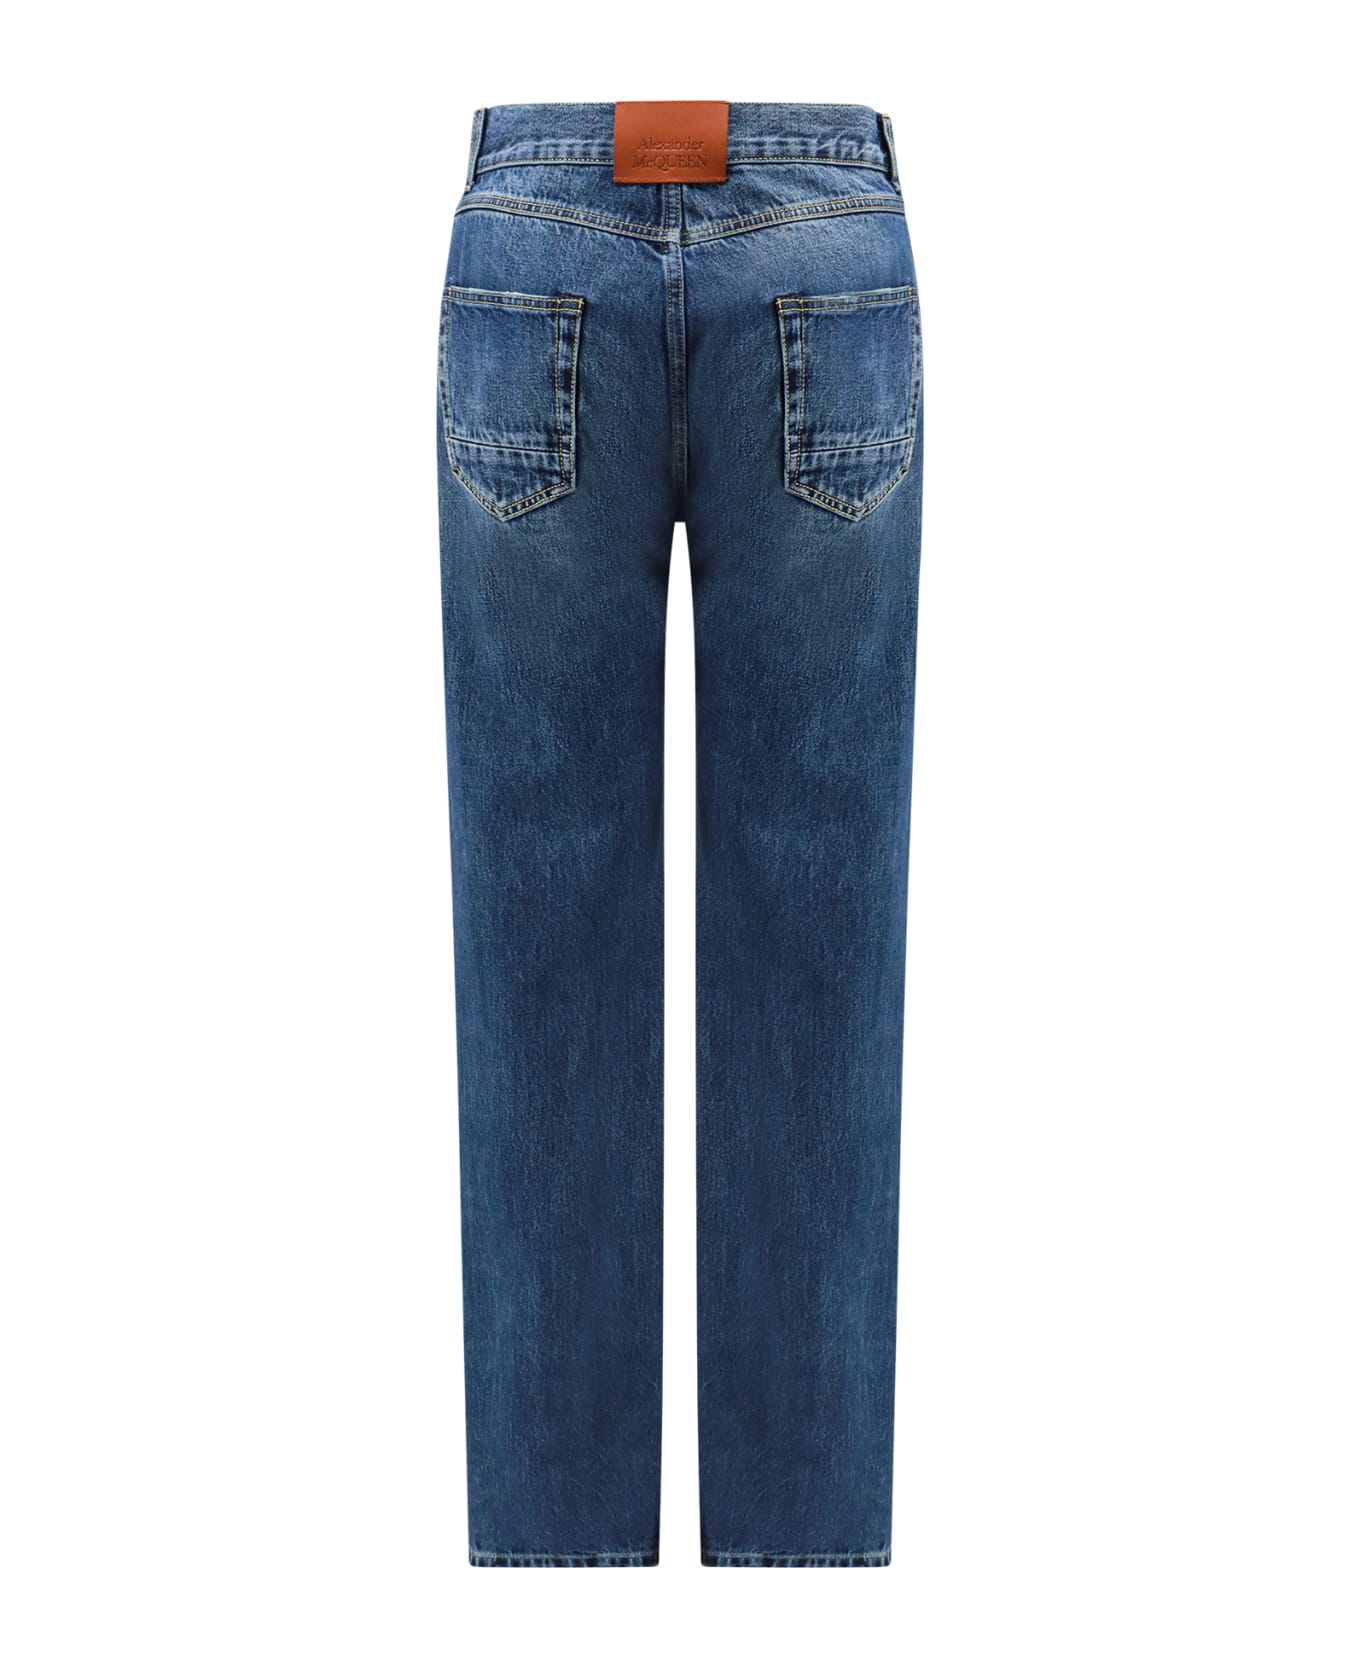 Alexander McQueen Cuffed Hems Jeans - Blue Washed